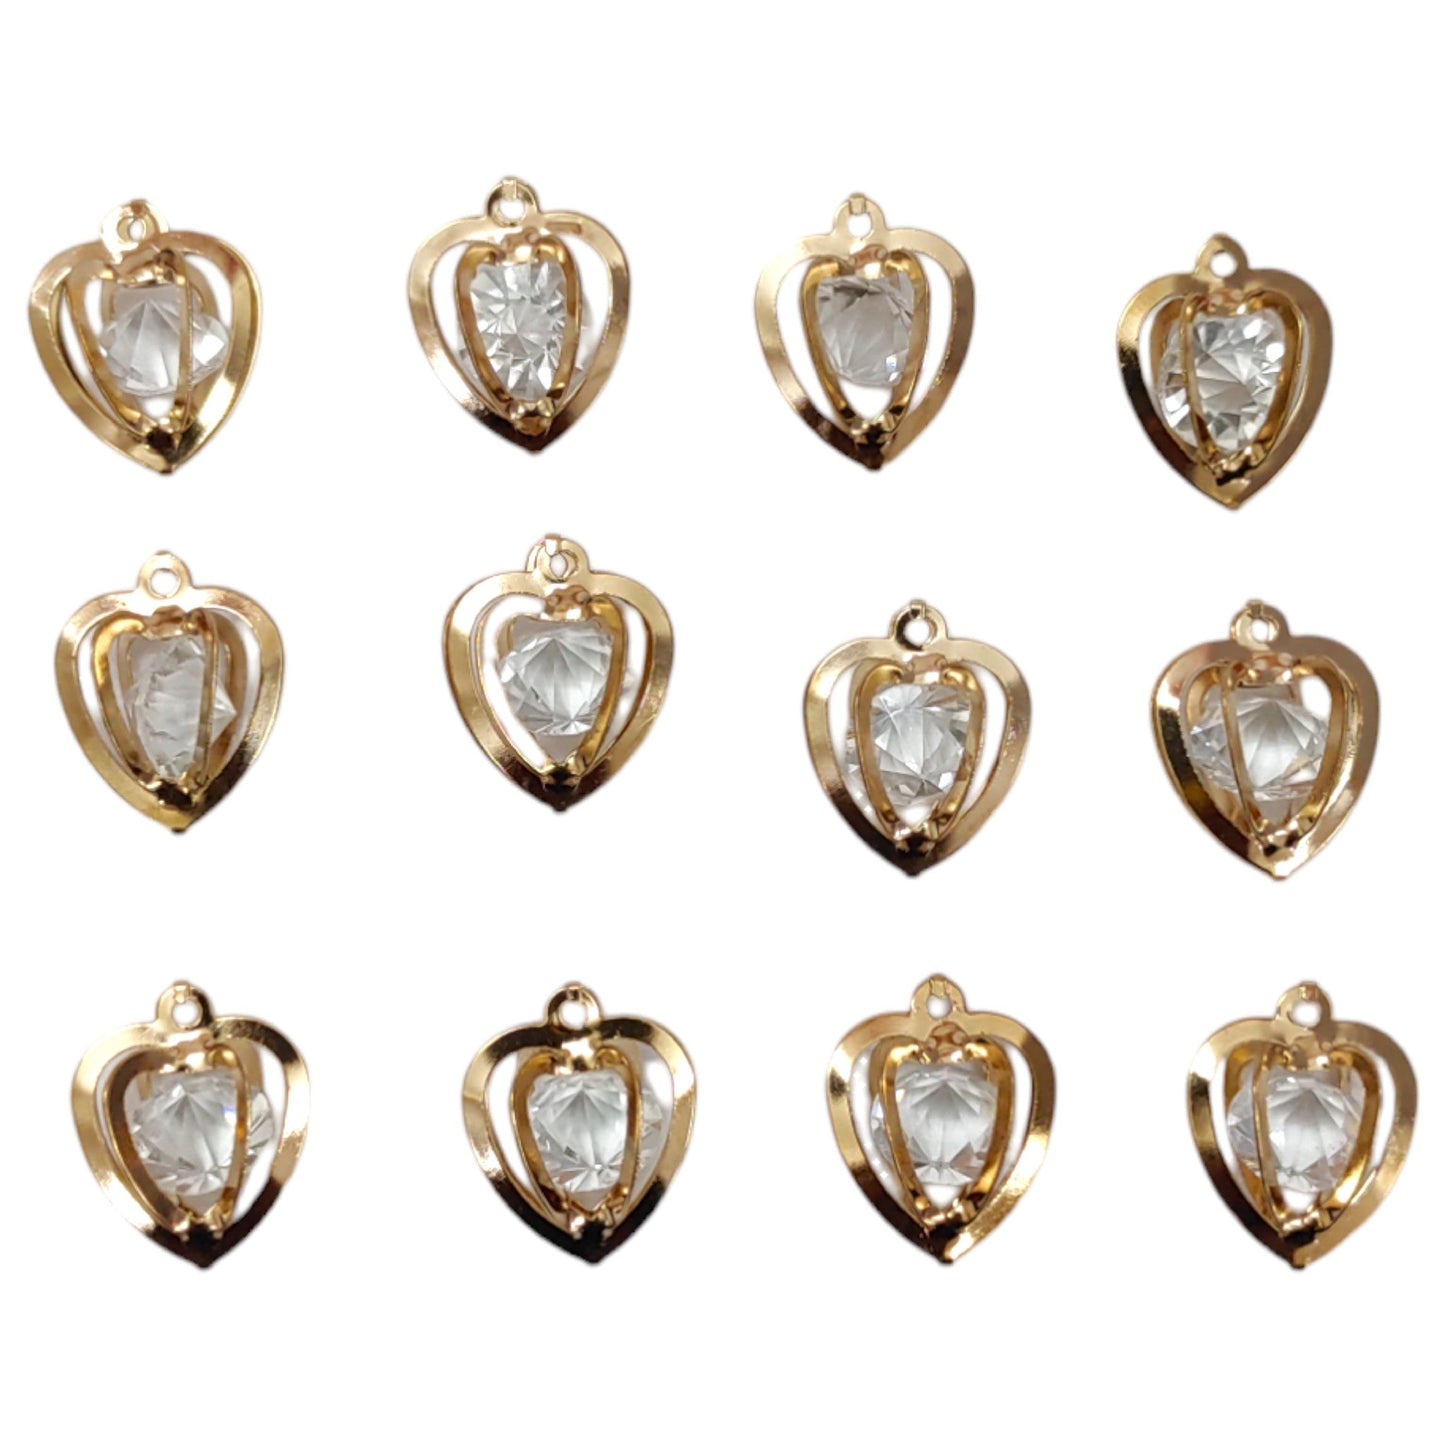 3D Metal Diamond Heart Shapped Pendent Golden Metal Motif For Craft or Decor